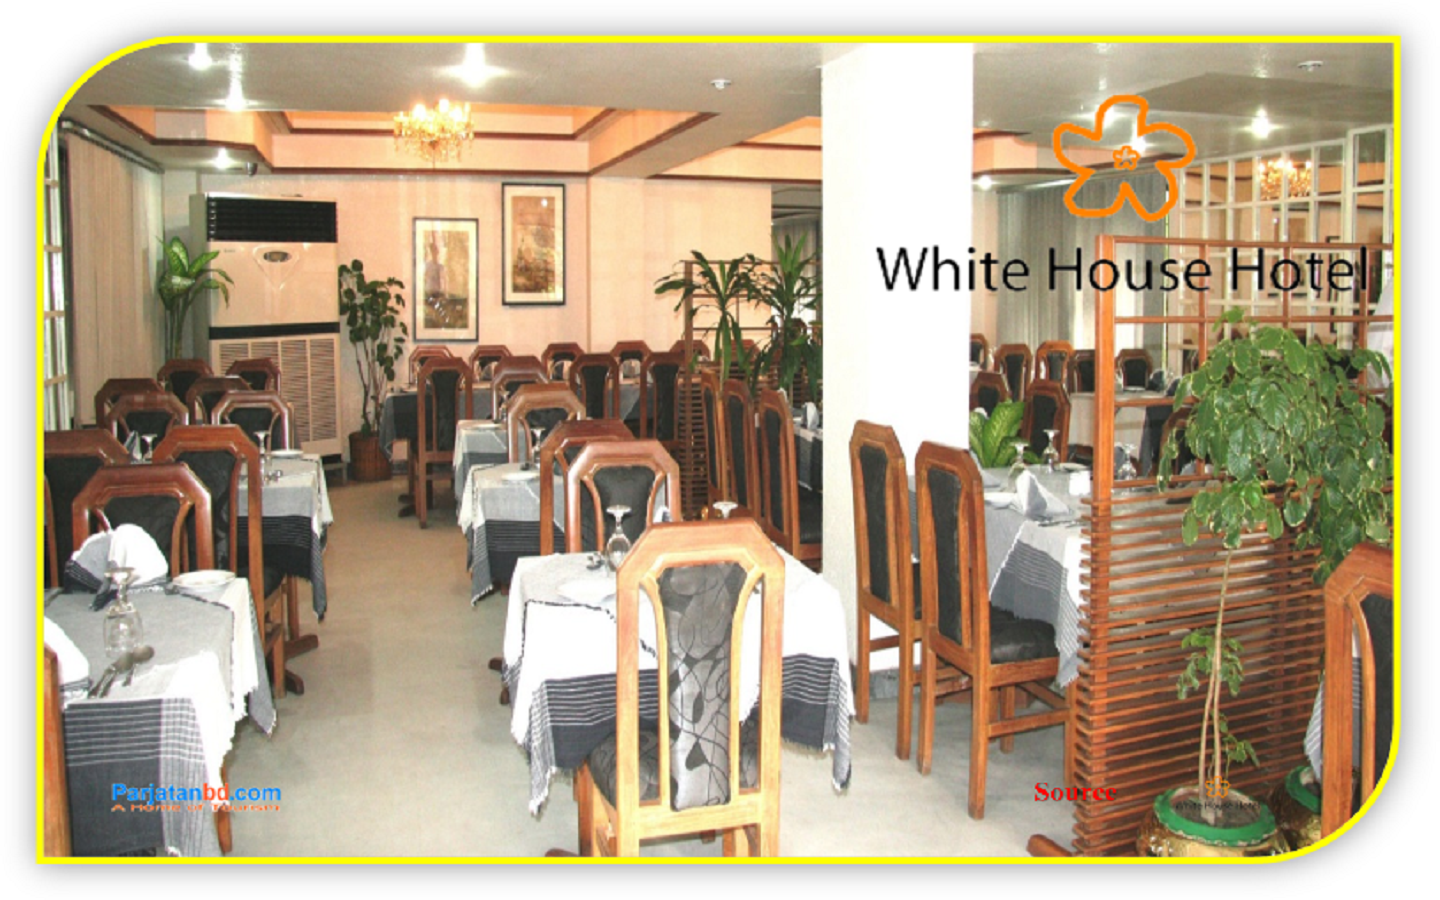 White House Hotel, Santinagar Picture-1